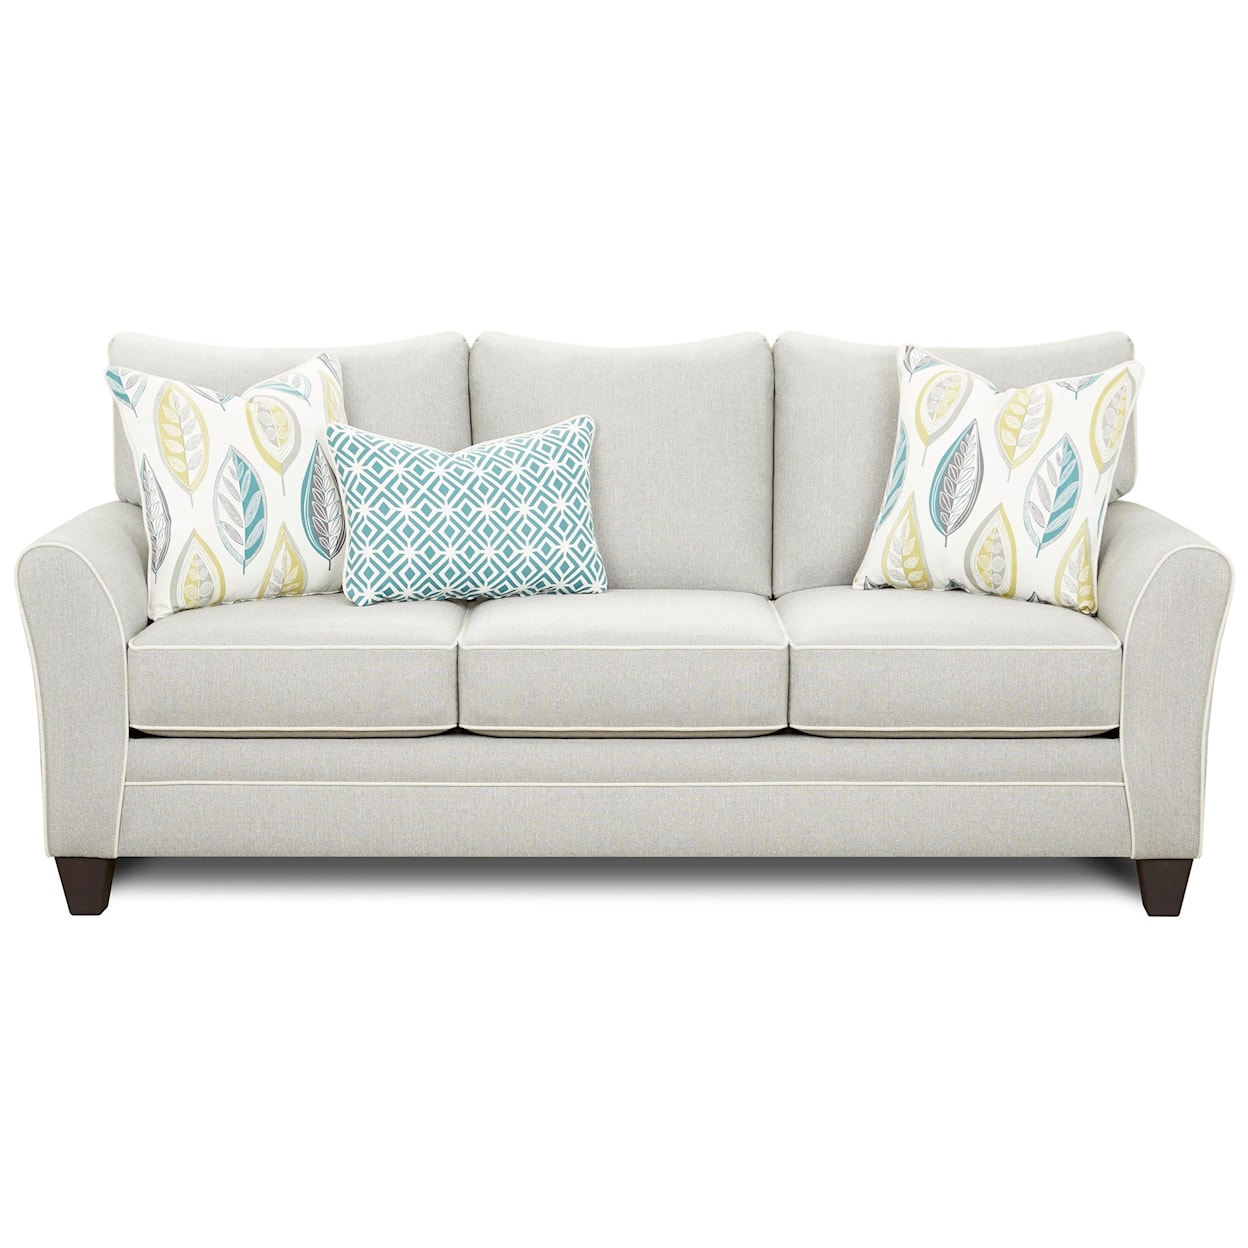 Fusion Furniture 41CW-00KP TNT NICKEL (REVOLUTION) Sofa